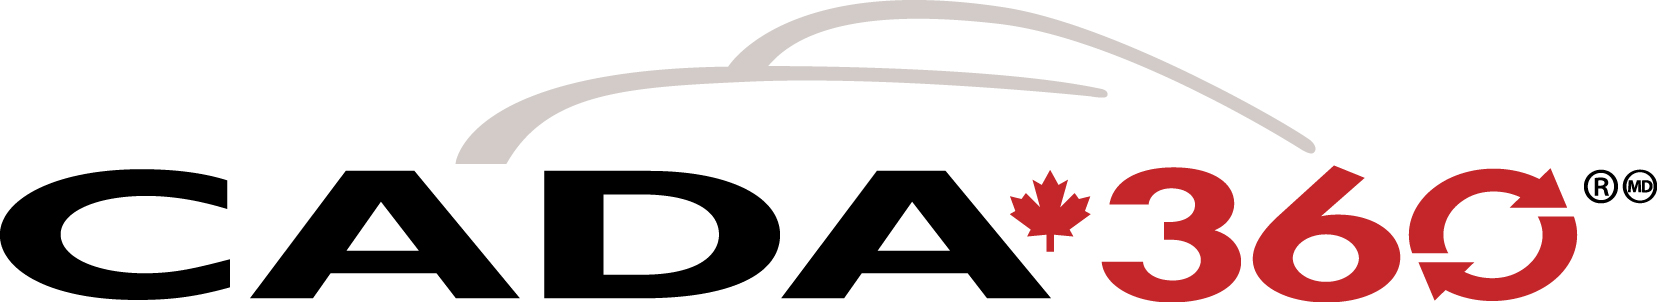 CADA 360 - Car dealership Employee Benefit Plan